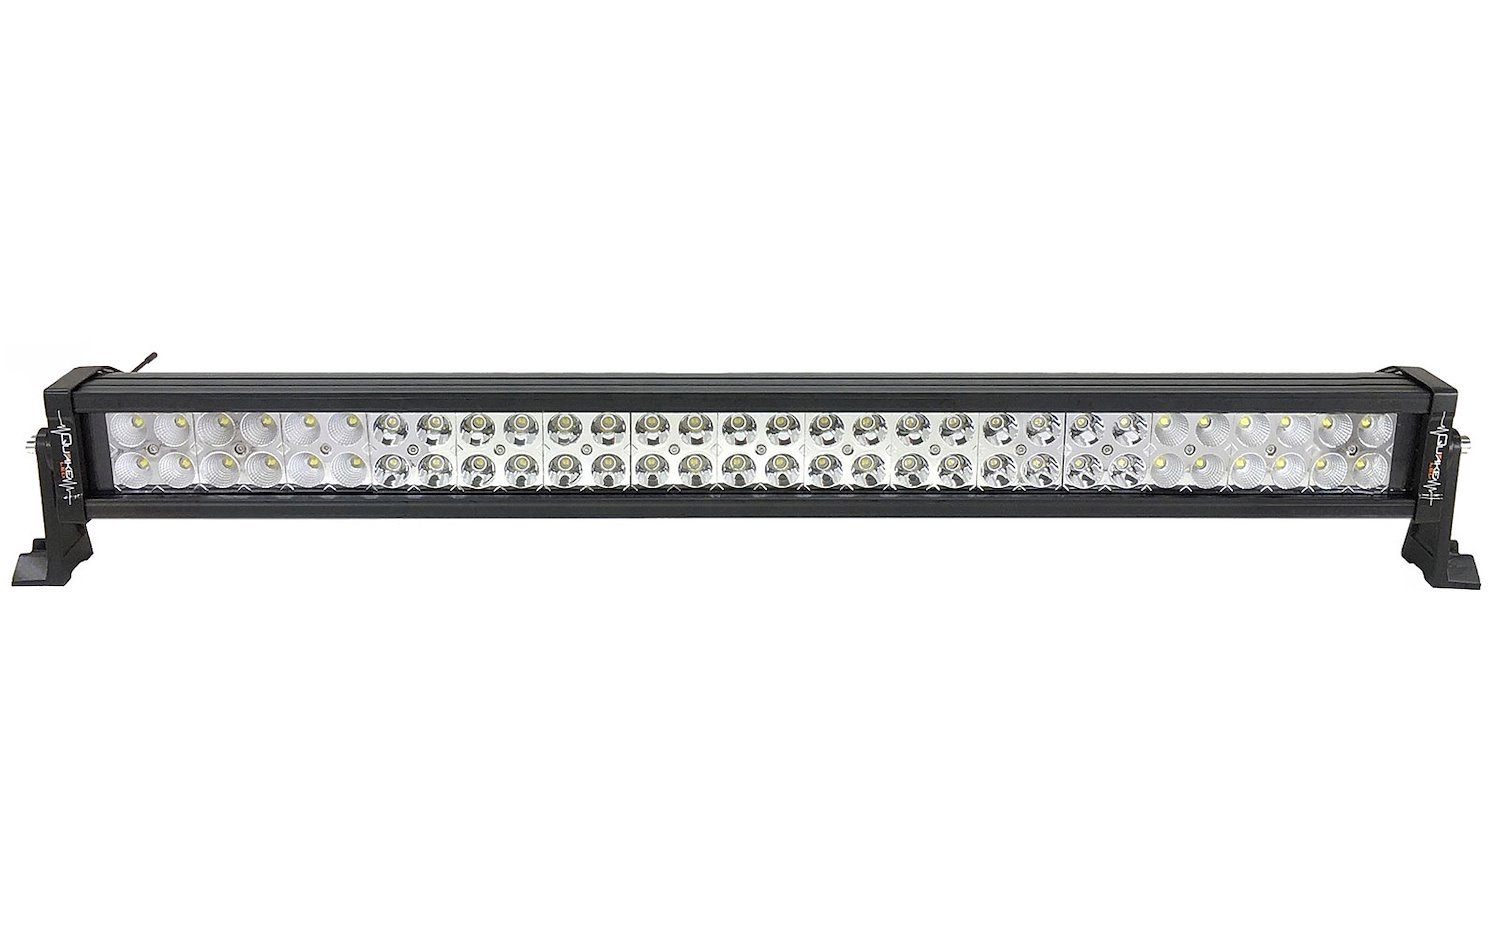 QUSN480 32 in. LED Light Bar, Dual Row, Super Nova Strobe